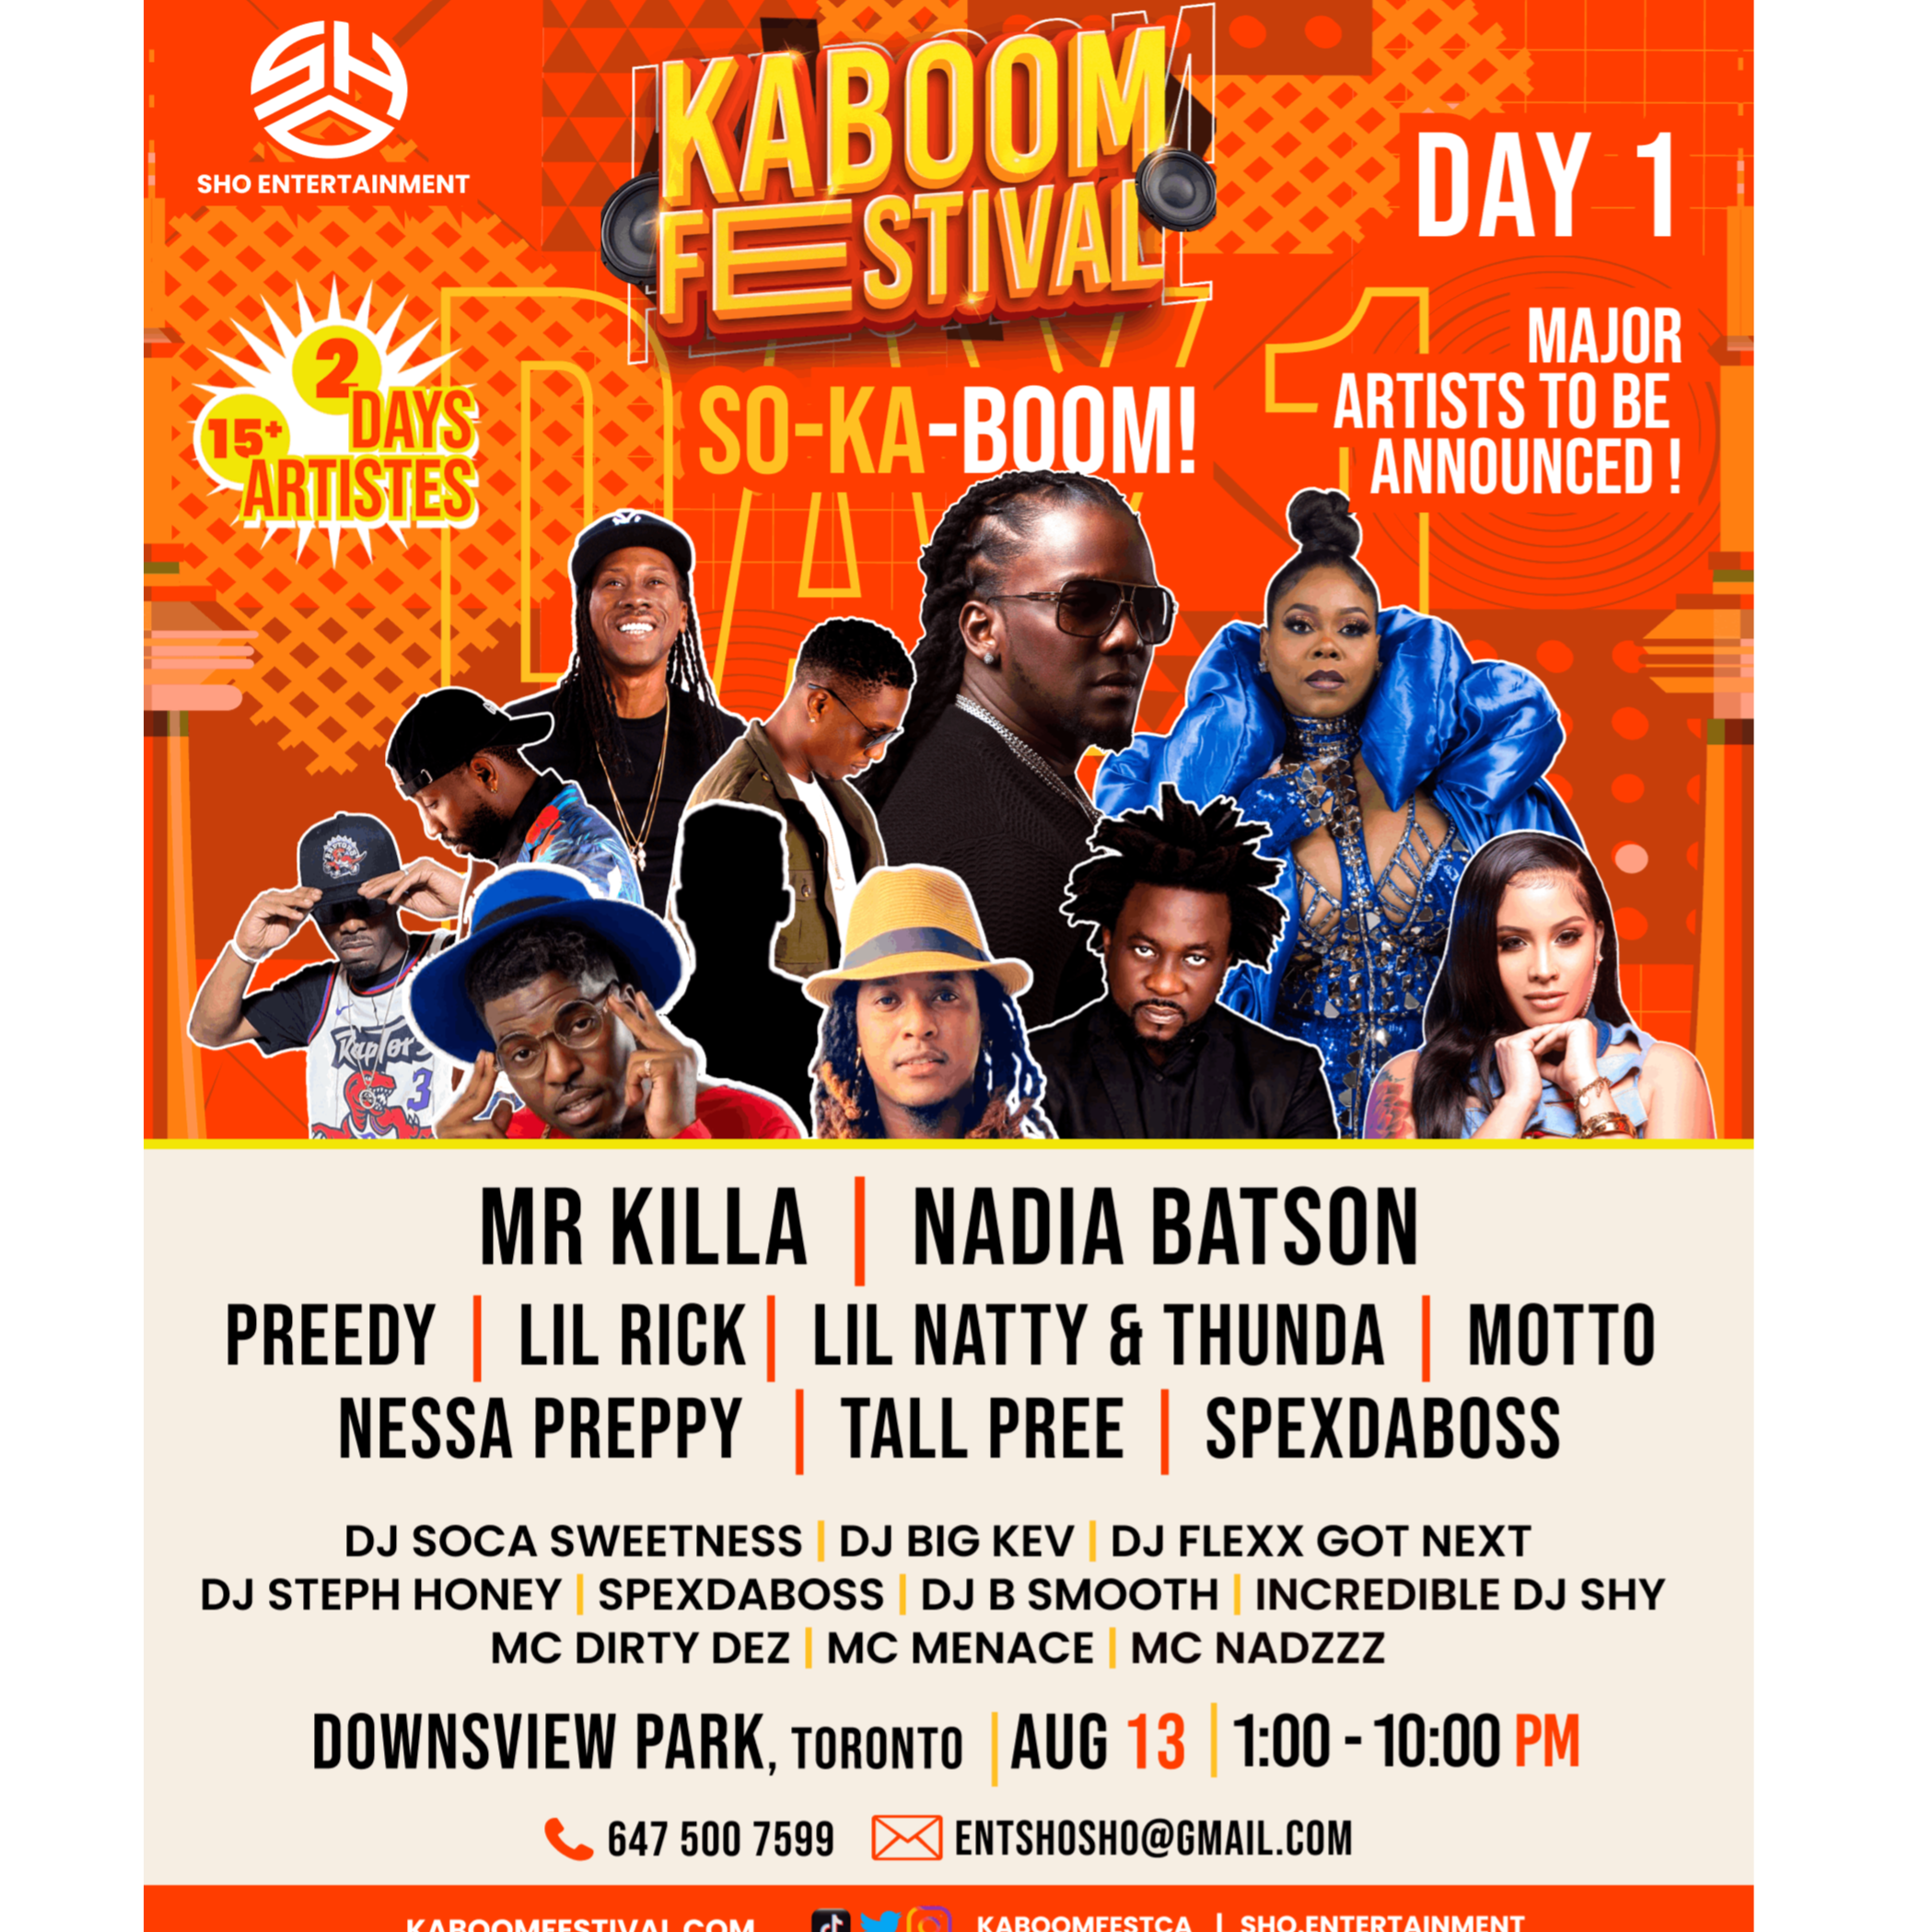 KABOOM FESTIVAL DAY 1 SO-KA-BOOM (AUG 13)